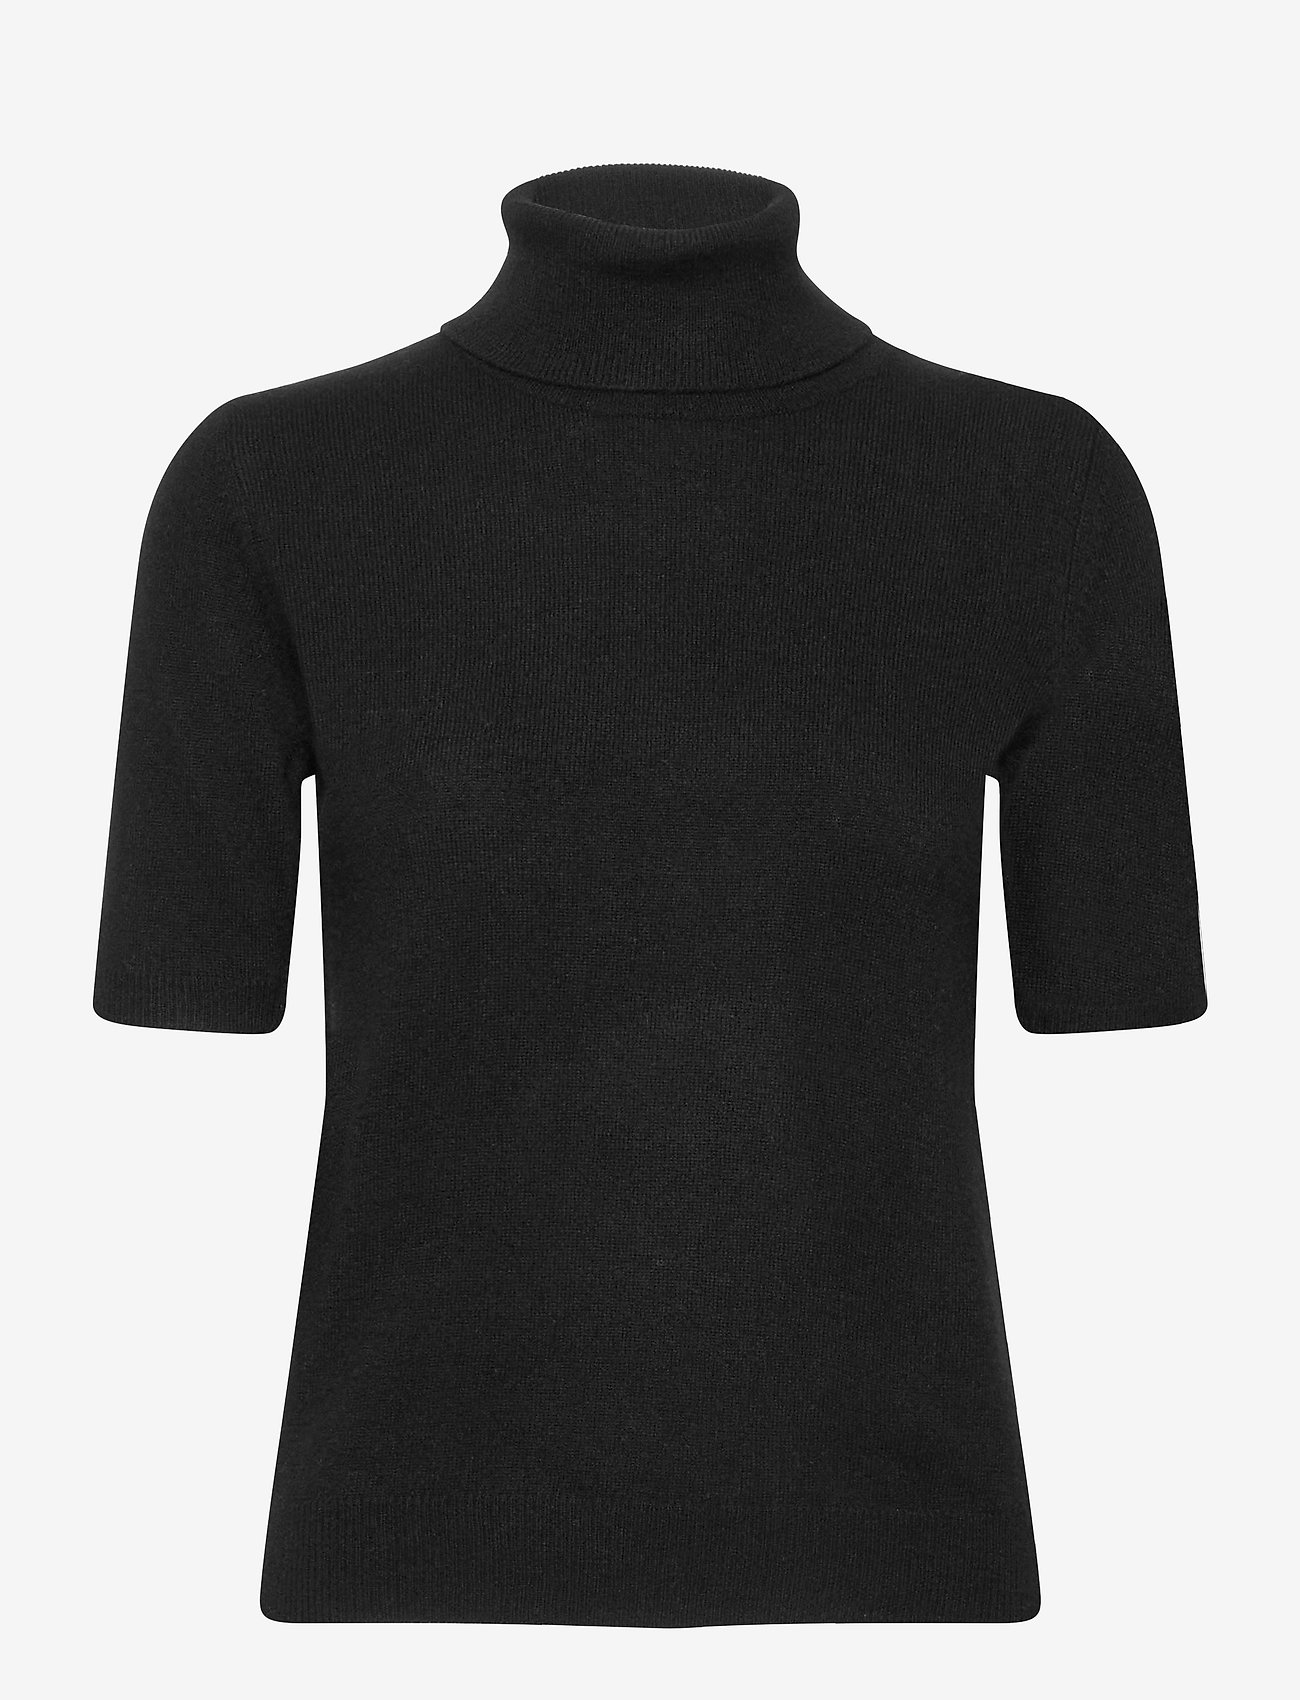 Davida Cashmere - Turtleneck T-shirt - polotröjor - black - 0